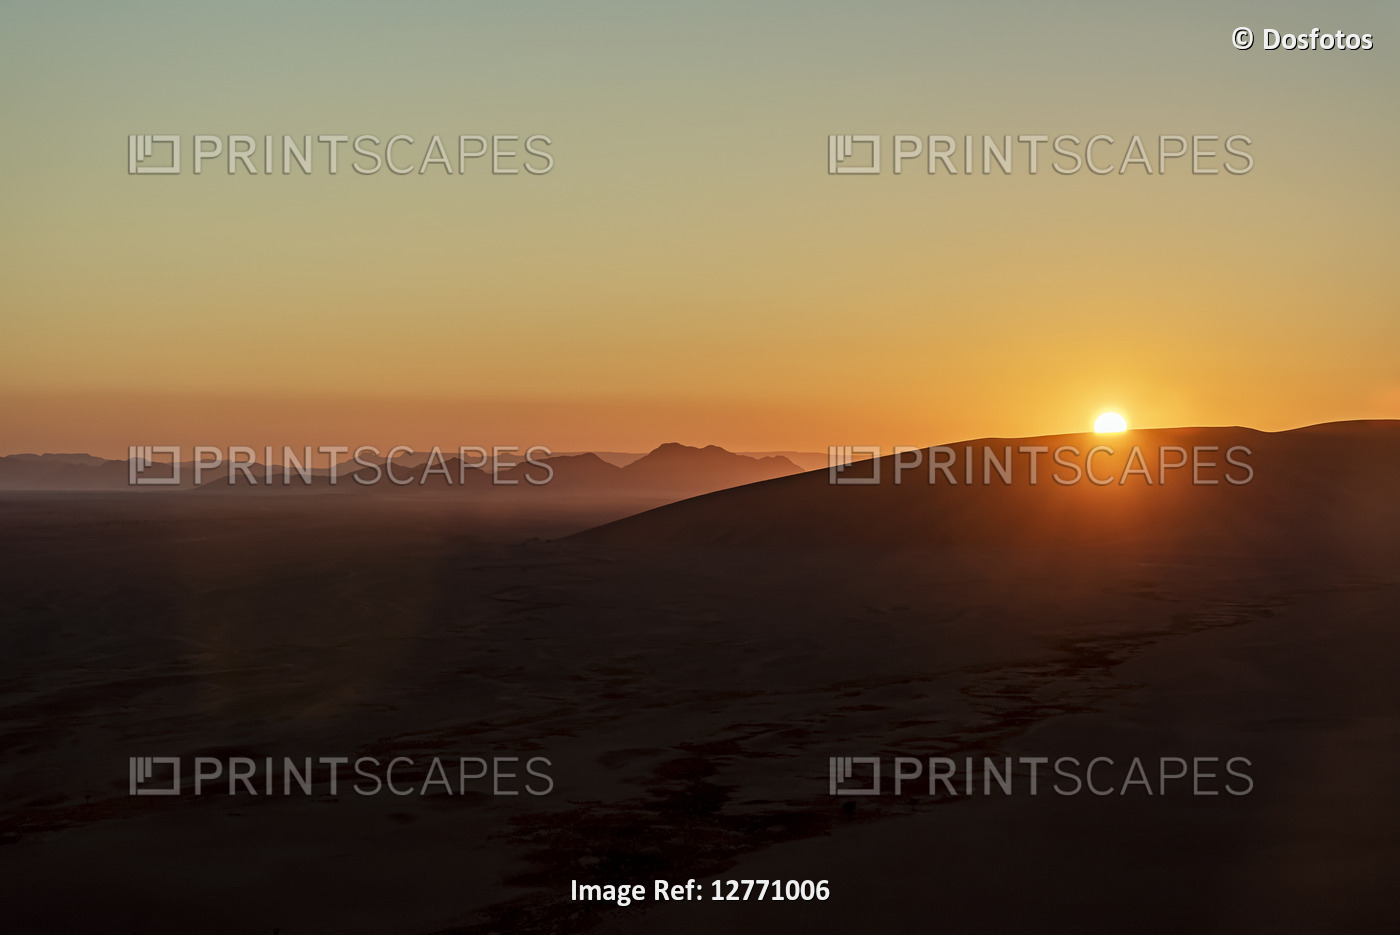 View from Dune 45 at sunrise, Sossusvlei, Namib Desert; Namibia